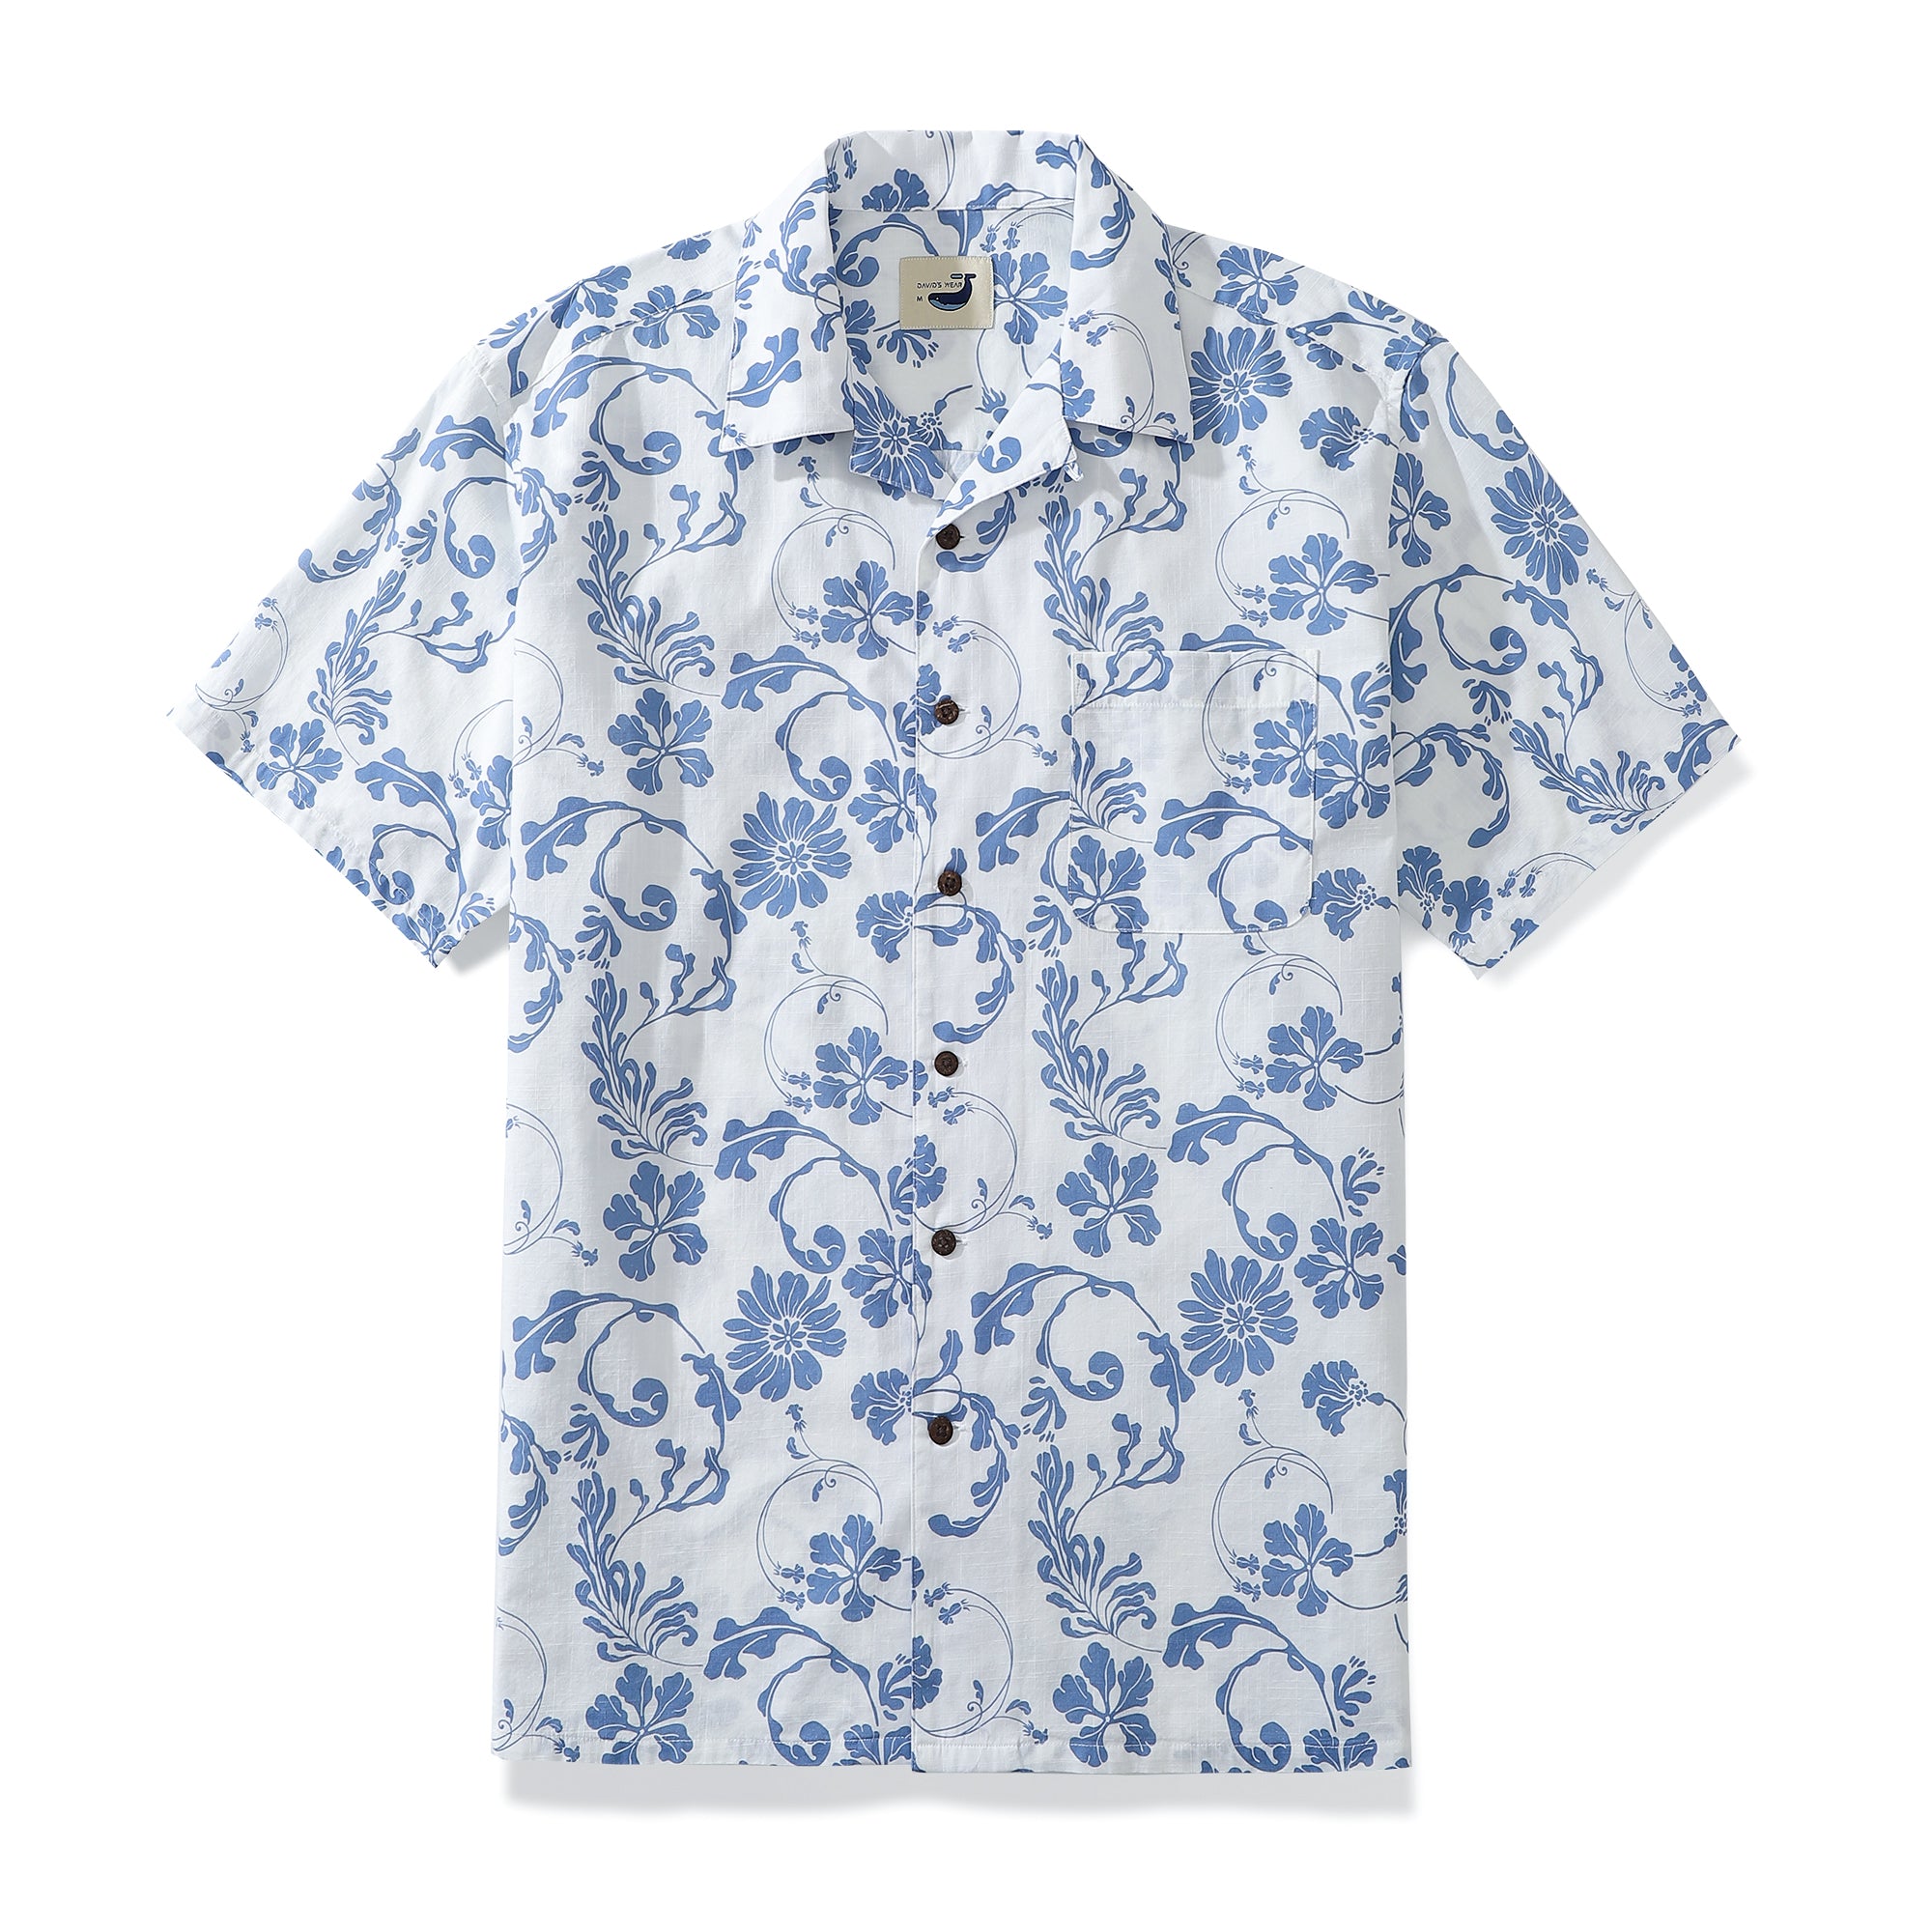 Light Blue Chrysanthemum White Cotton Shirt Soft and Comfortable